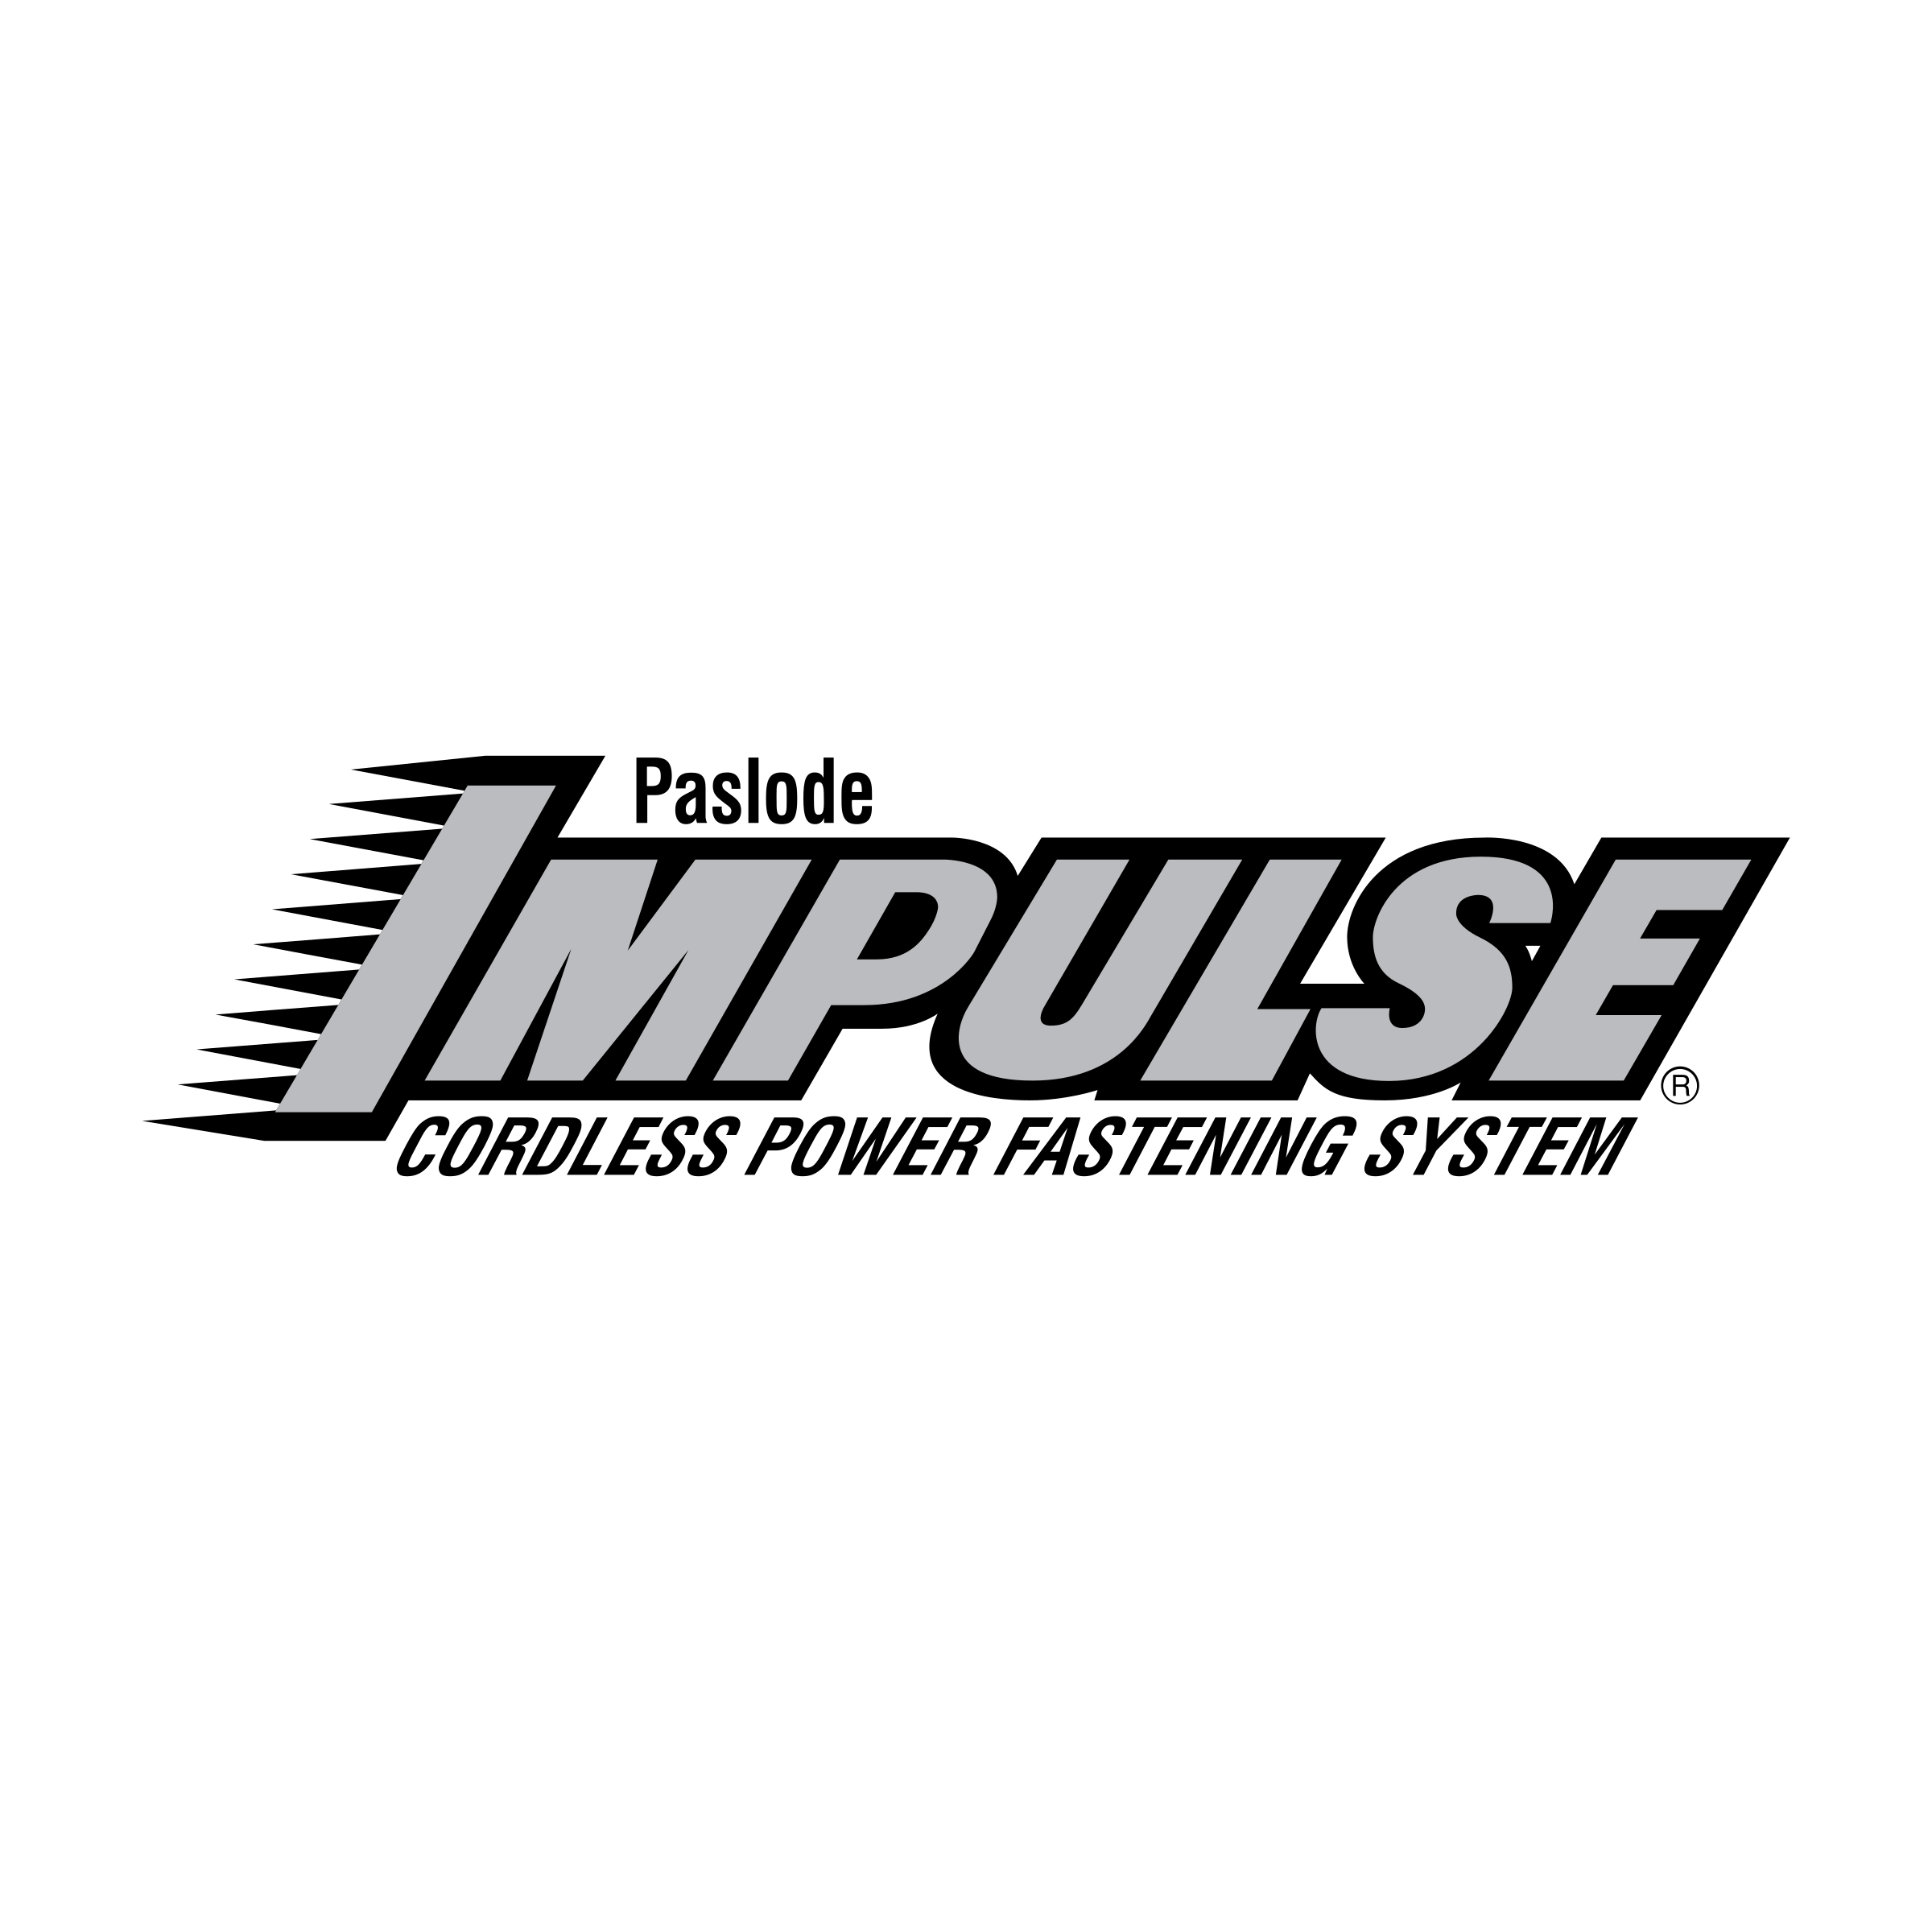 Impulse Logo